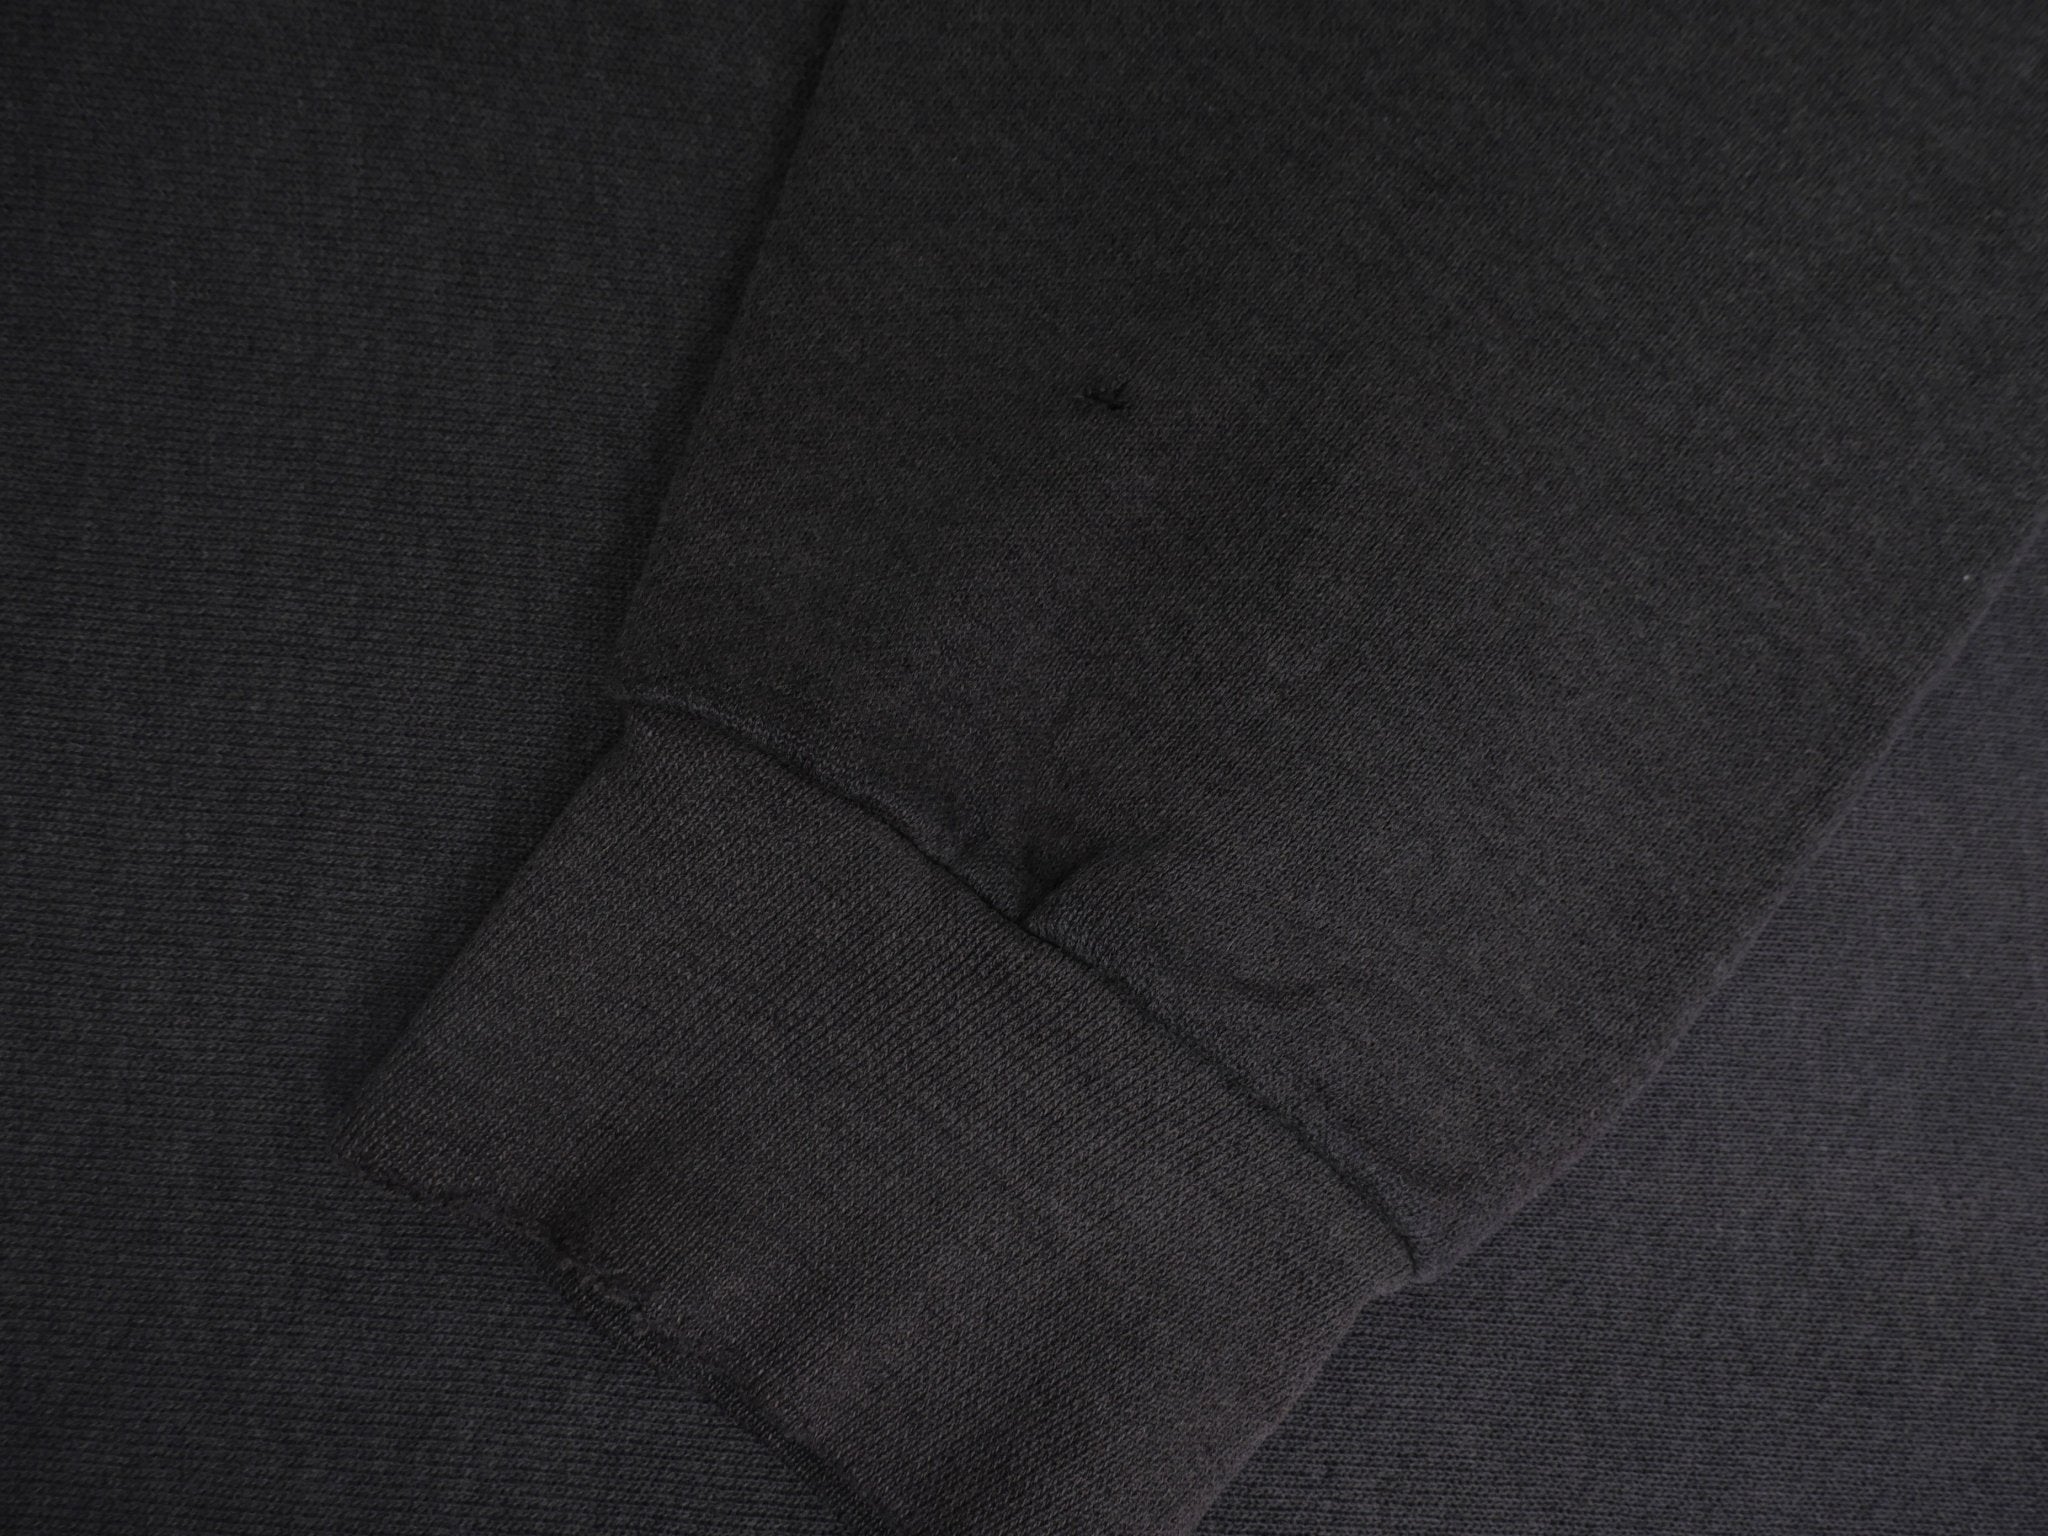 Lee 'New Hudson' printed grey Sweater - Peeces